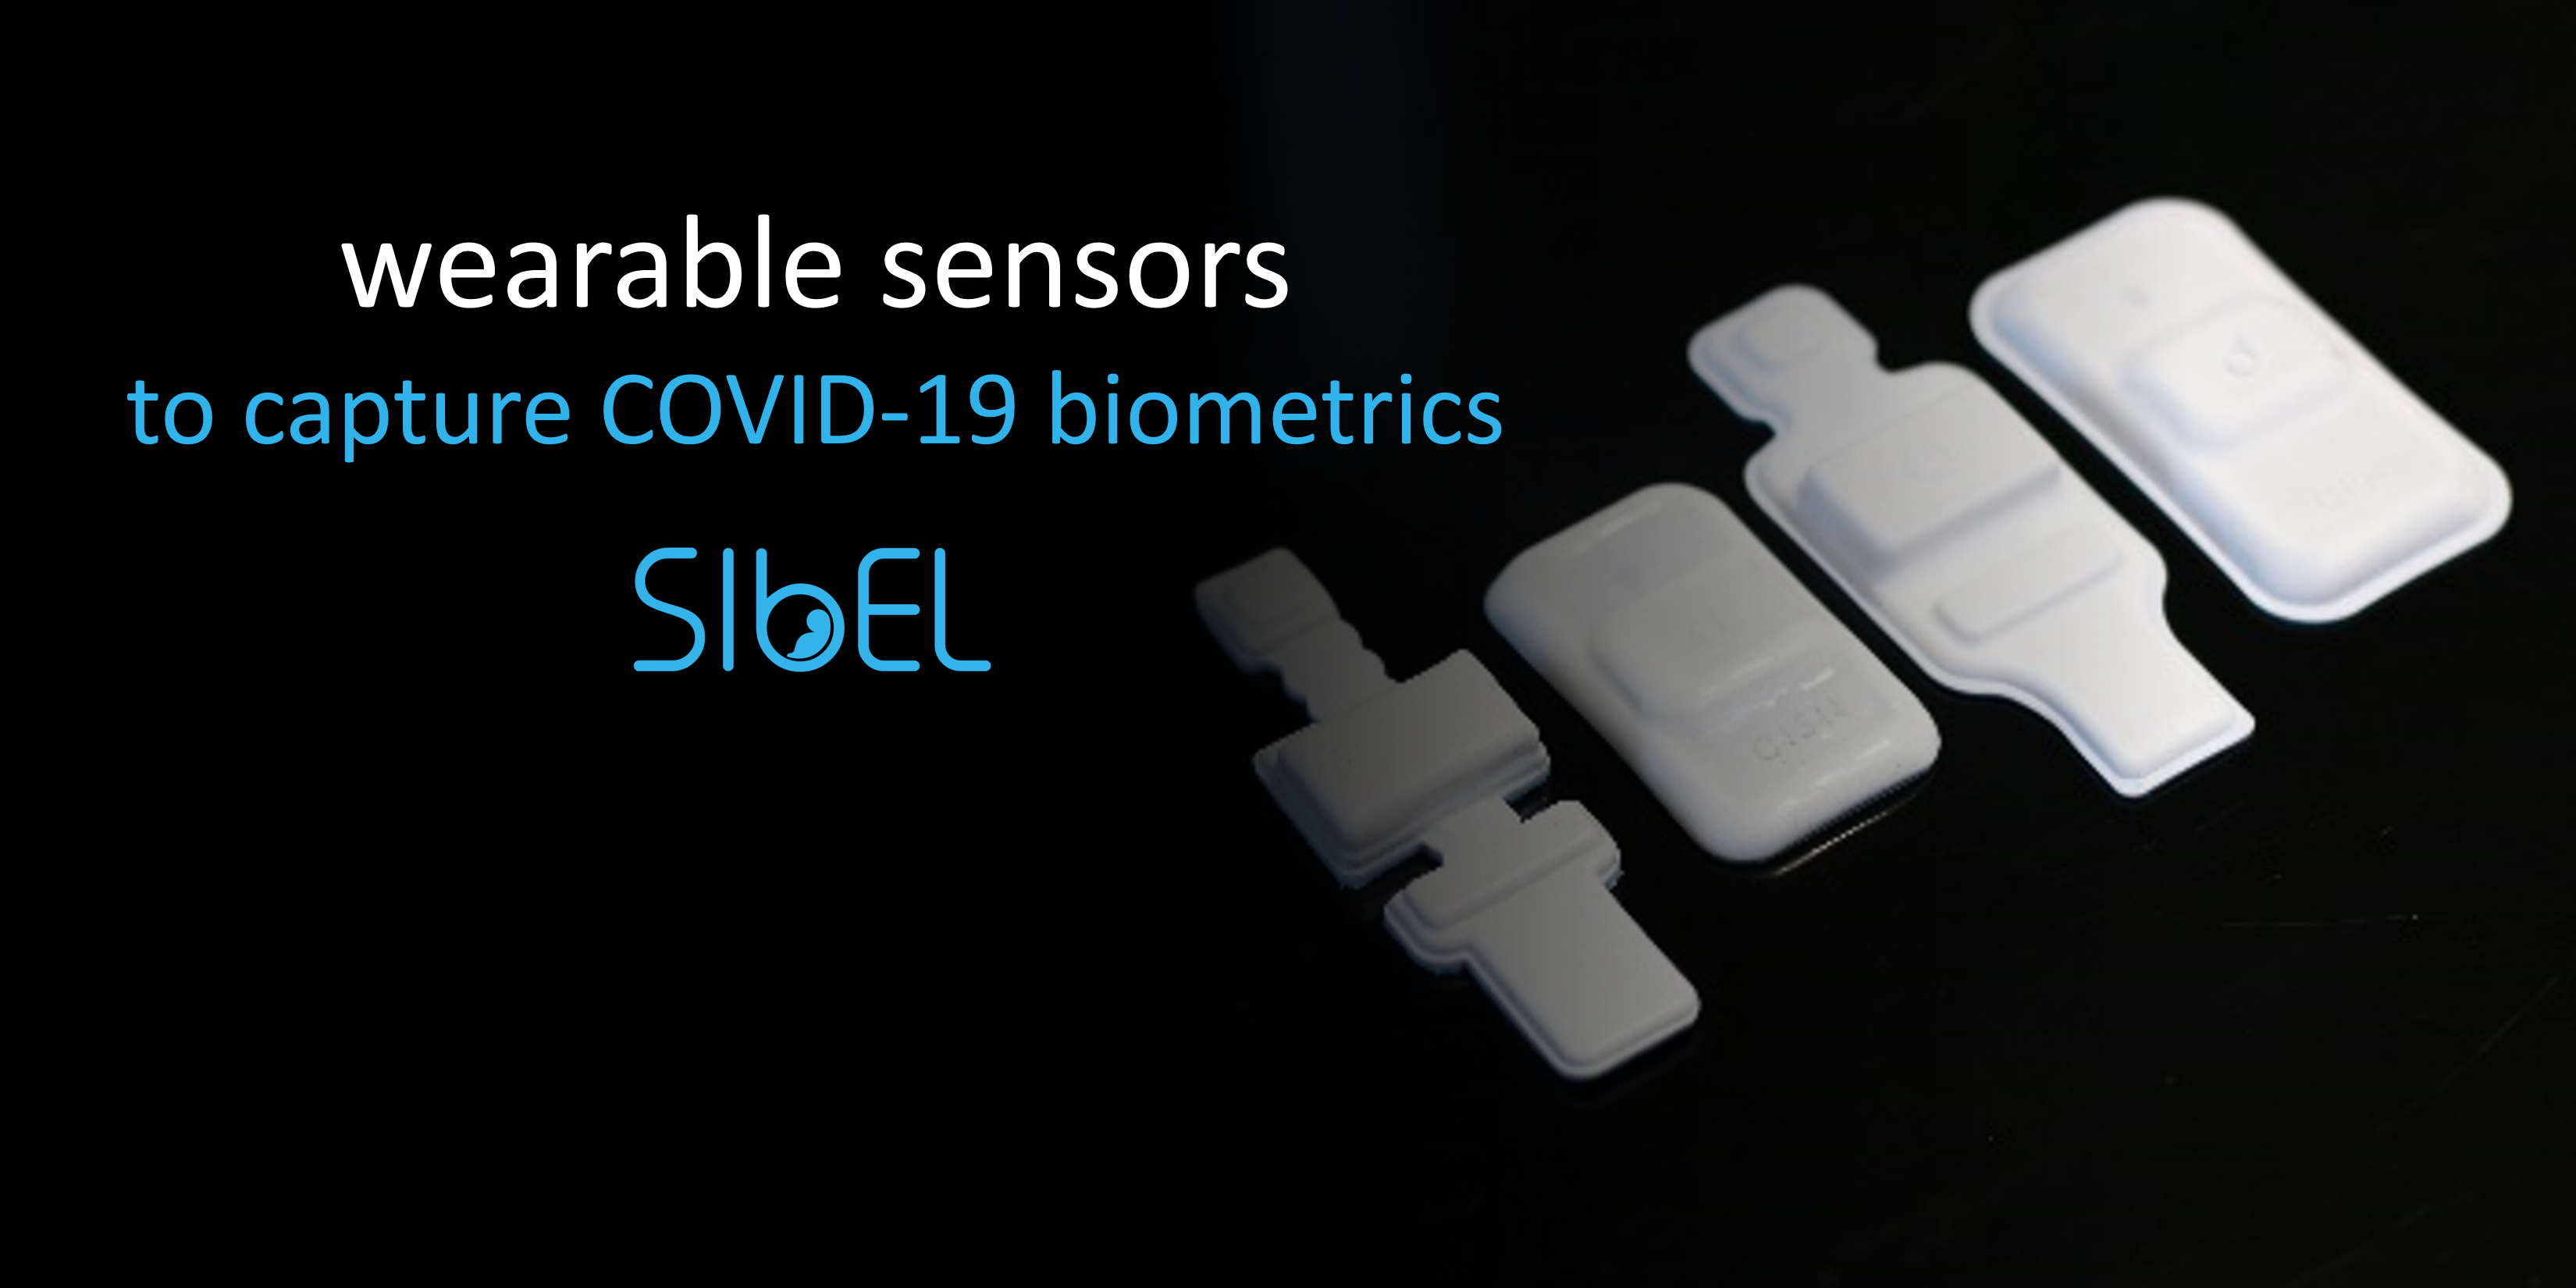 Wearable sensors to capture COVID-19 biometrics from Sibel photo